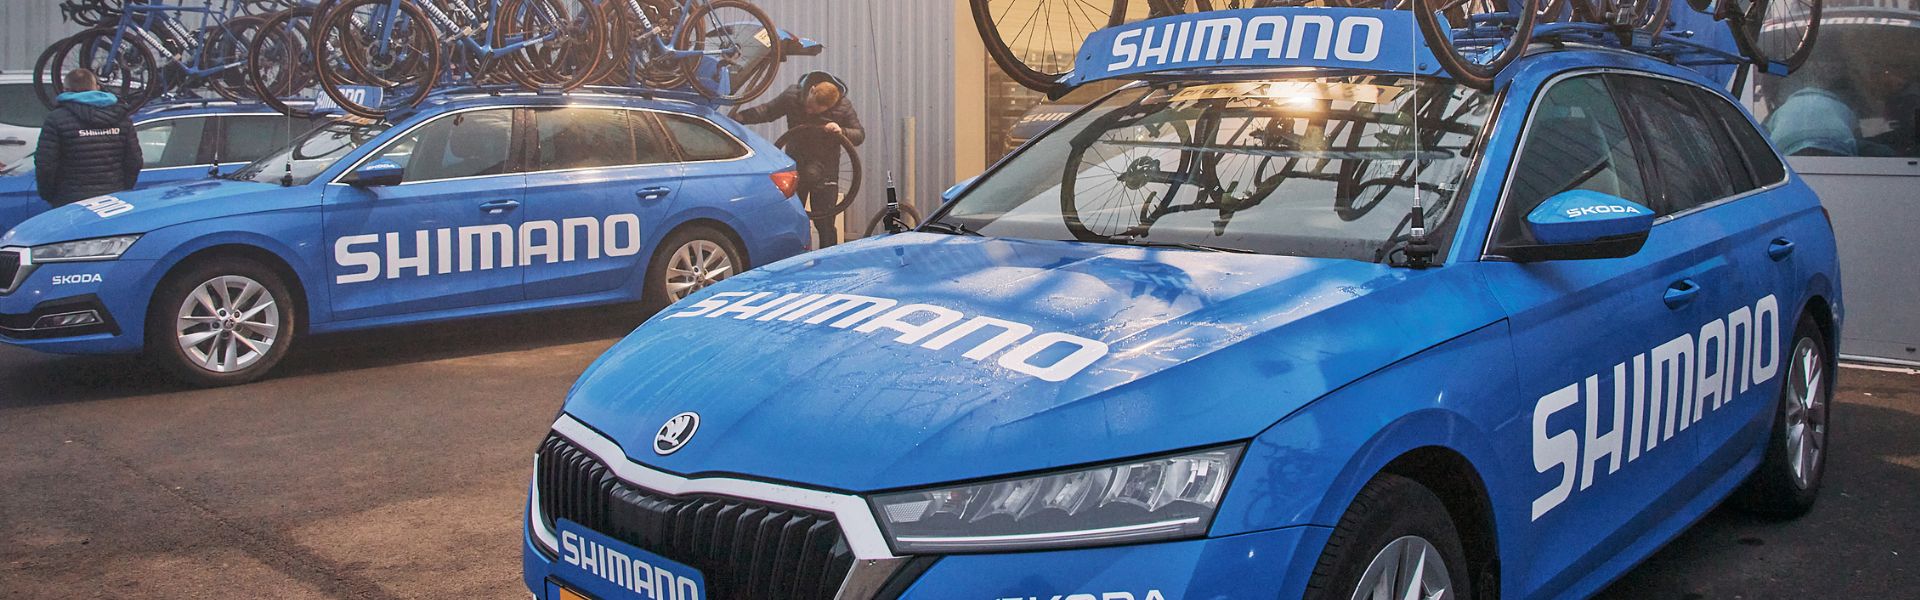 SHIMANO Human Science: Paris-Roubaix mit dem Motorrad